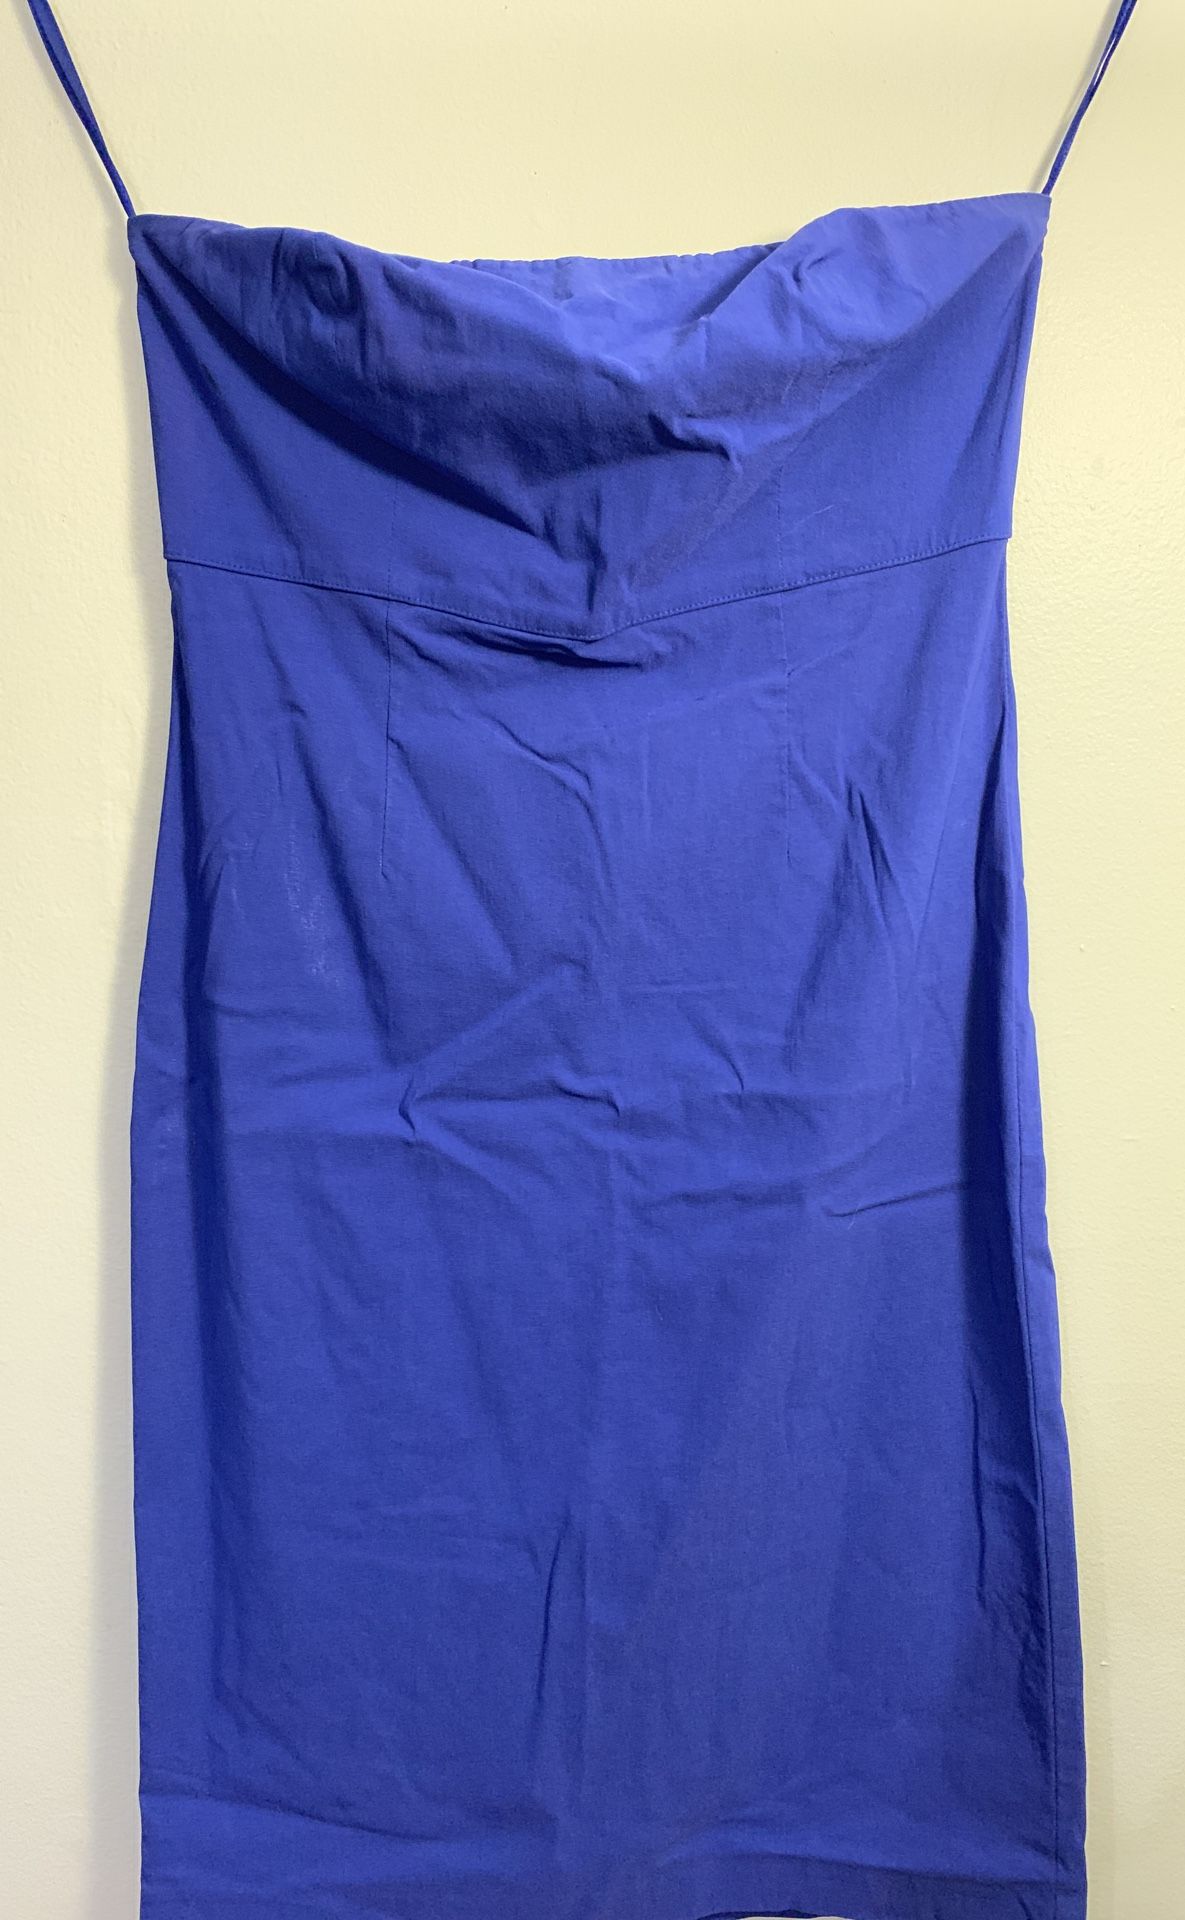 Strapless blue dress